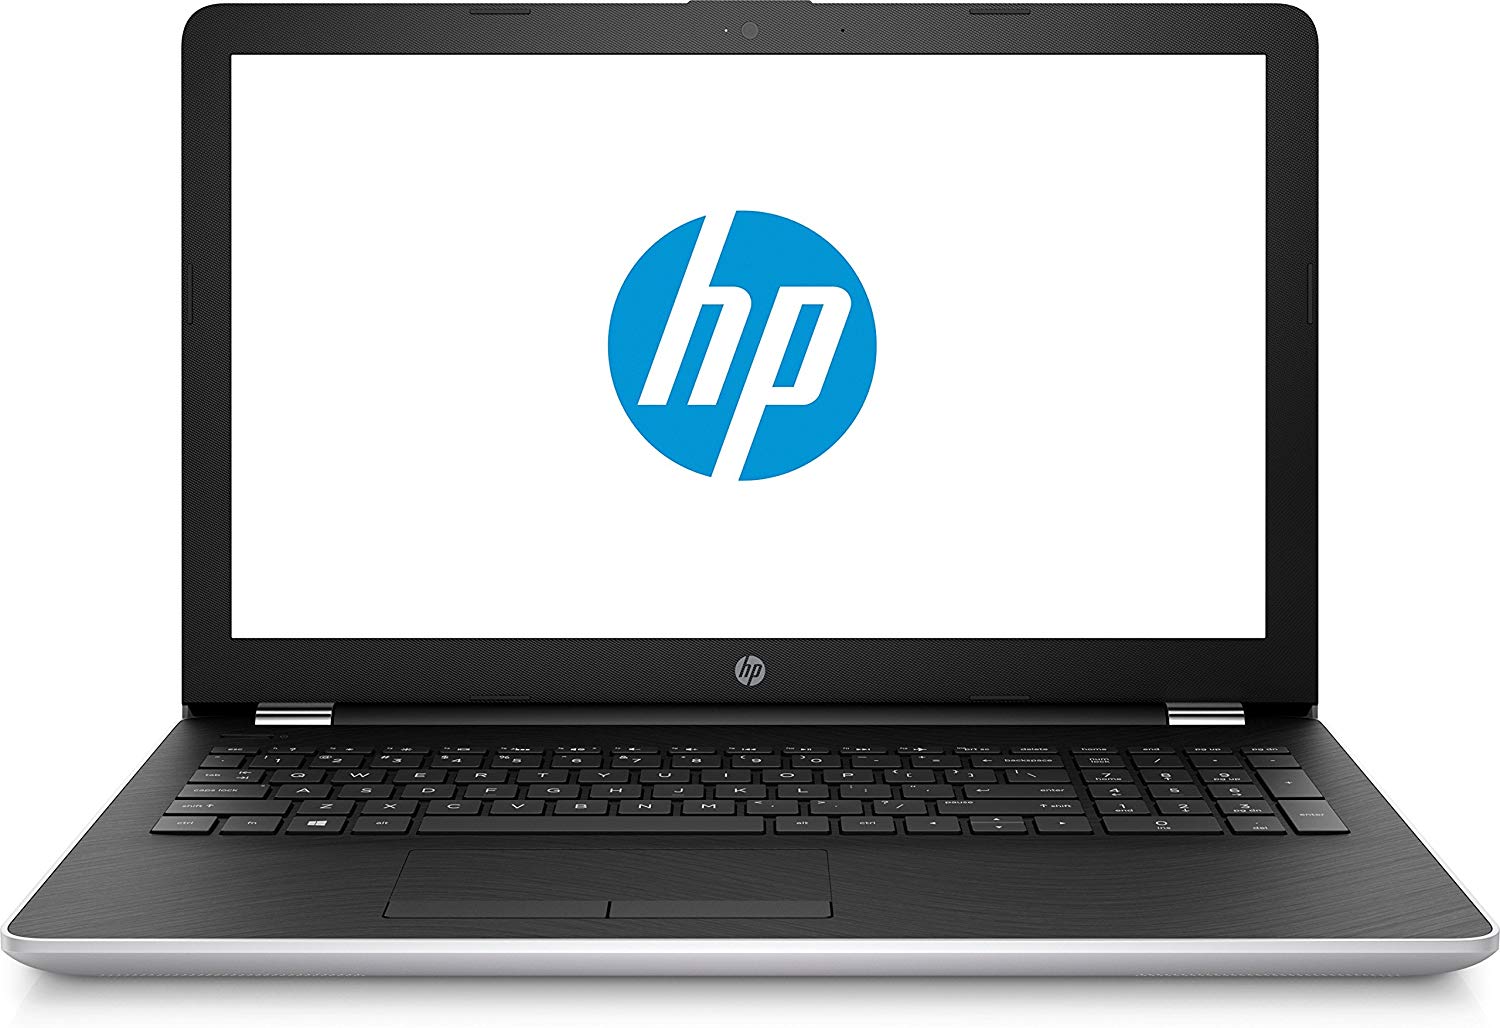 HP Laptop 15-DA0435TX/ 7th Gen i3-7100U / 8 GB  /1 TB /2 GB /Nvidia MX110 DDR5/ W10 MSO H & S 2016 /Island KBD with N’Pad /15.6" FHD/ NS